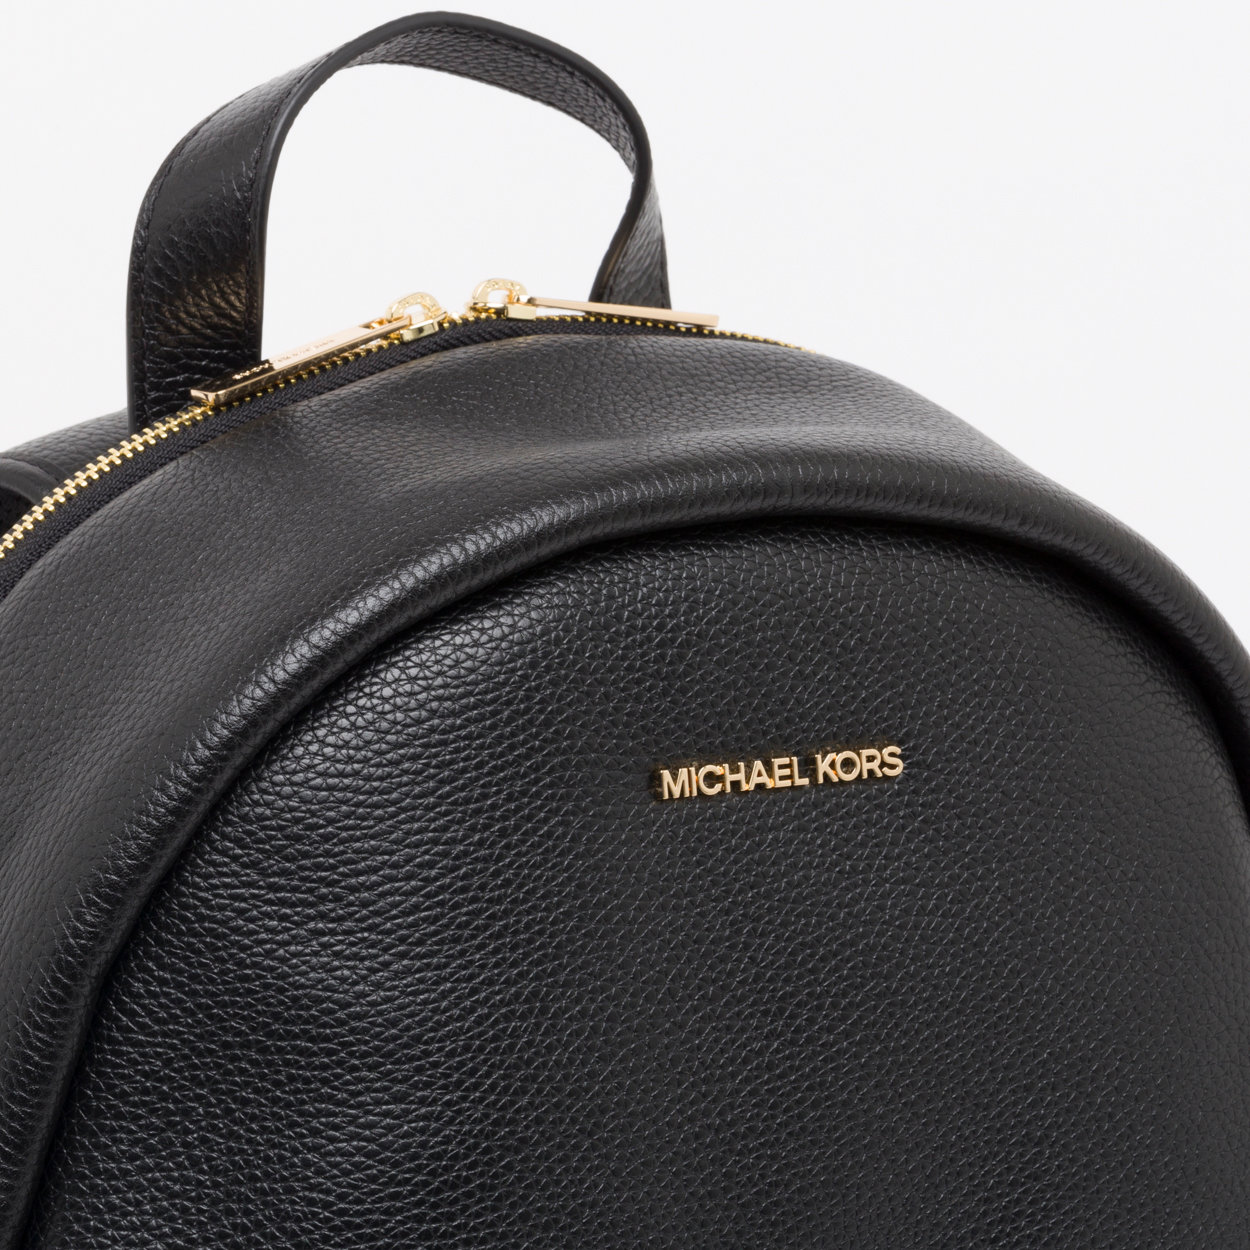 Michael Kors Erin large backpack in black leather - Michael Kors - Purchase  on Ventis.